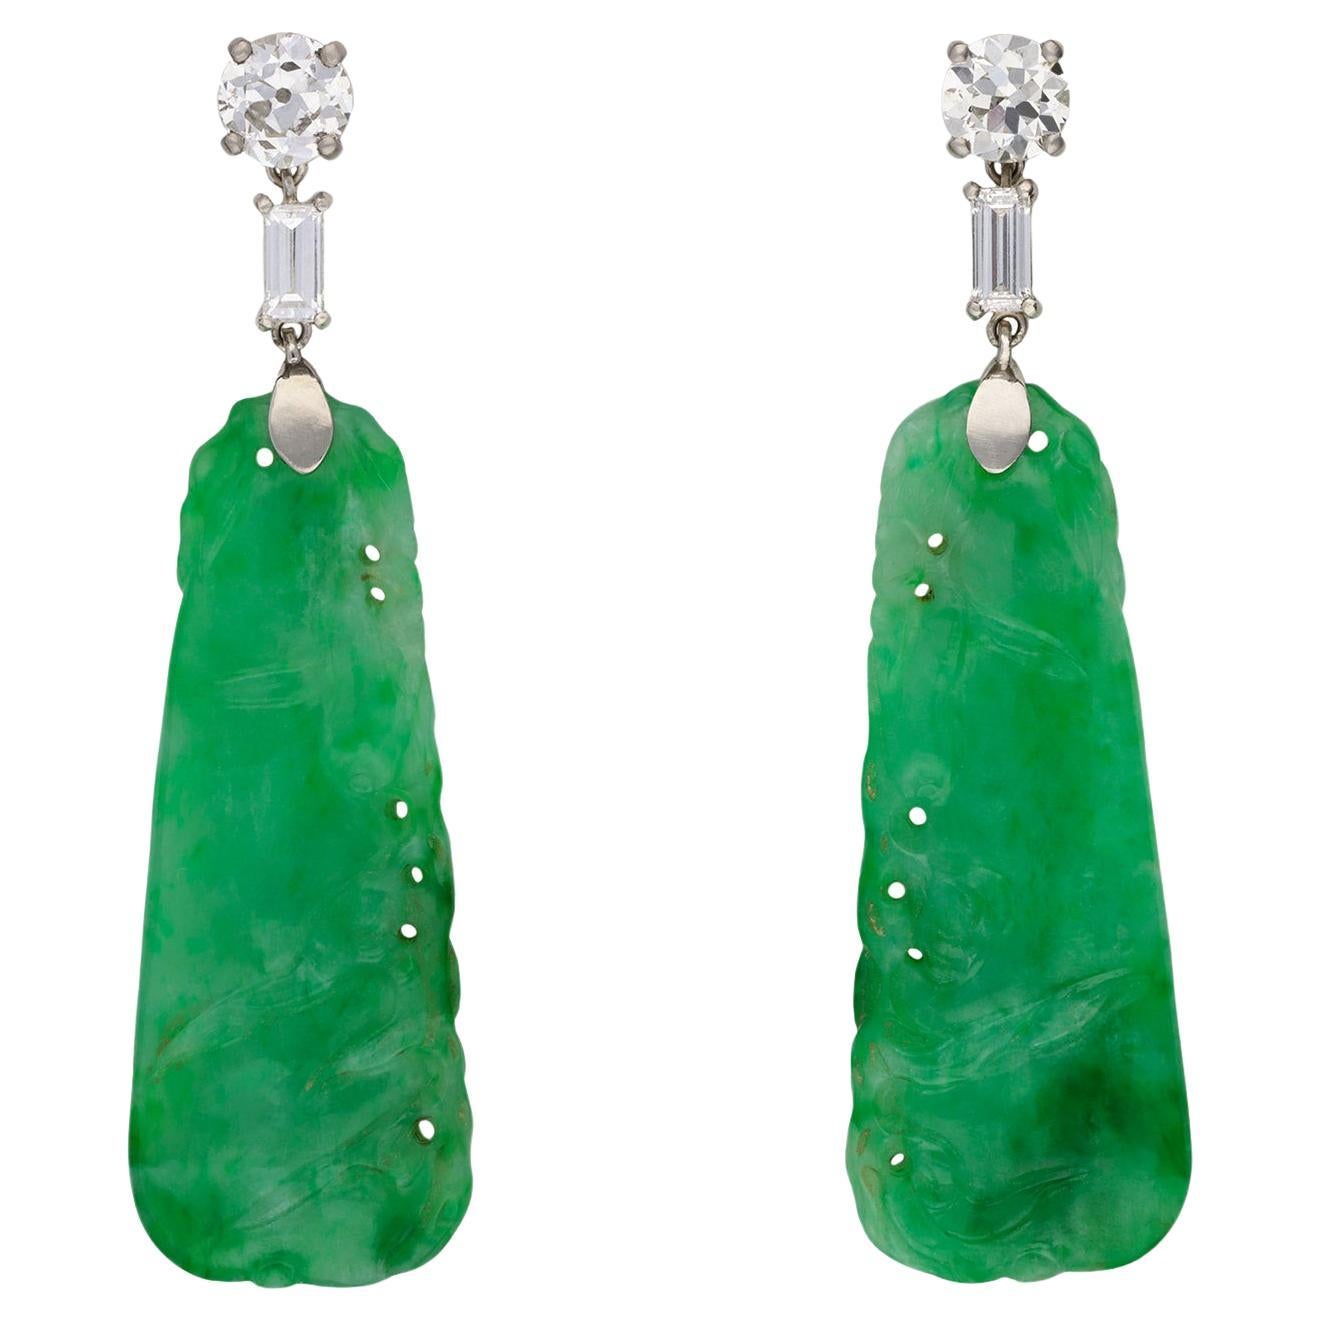 Art Deco diamond and jade earrings, circa 1925. 